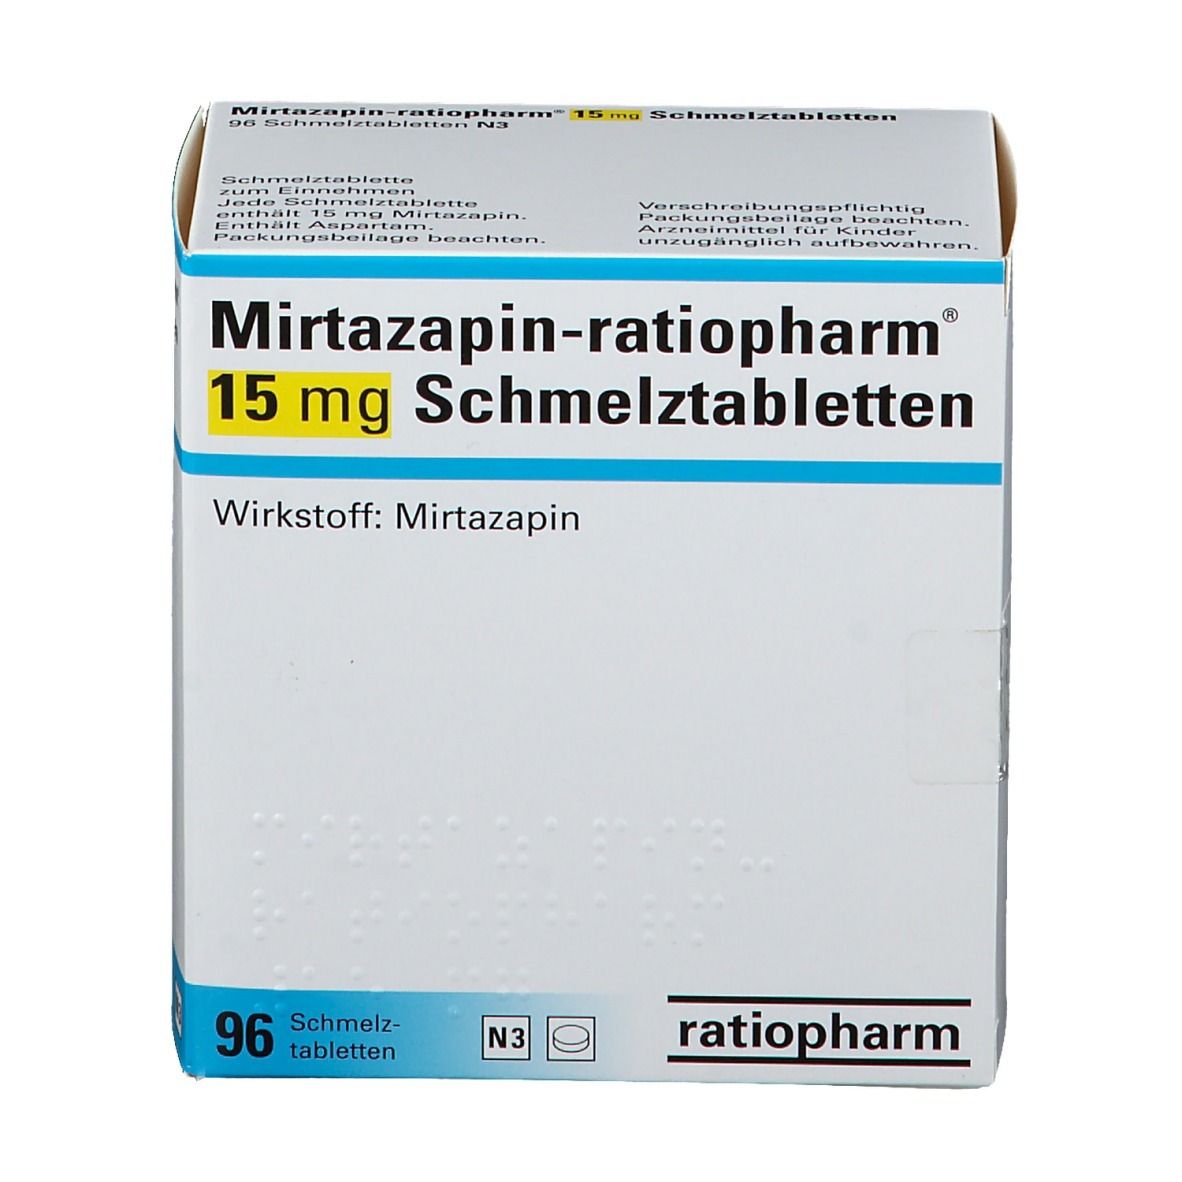 Mirtazapin-ratiopharm® 15 mg Schmelztabletten